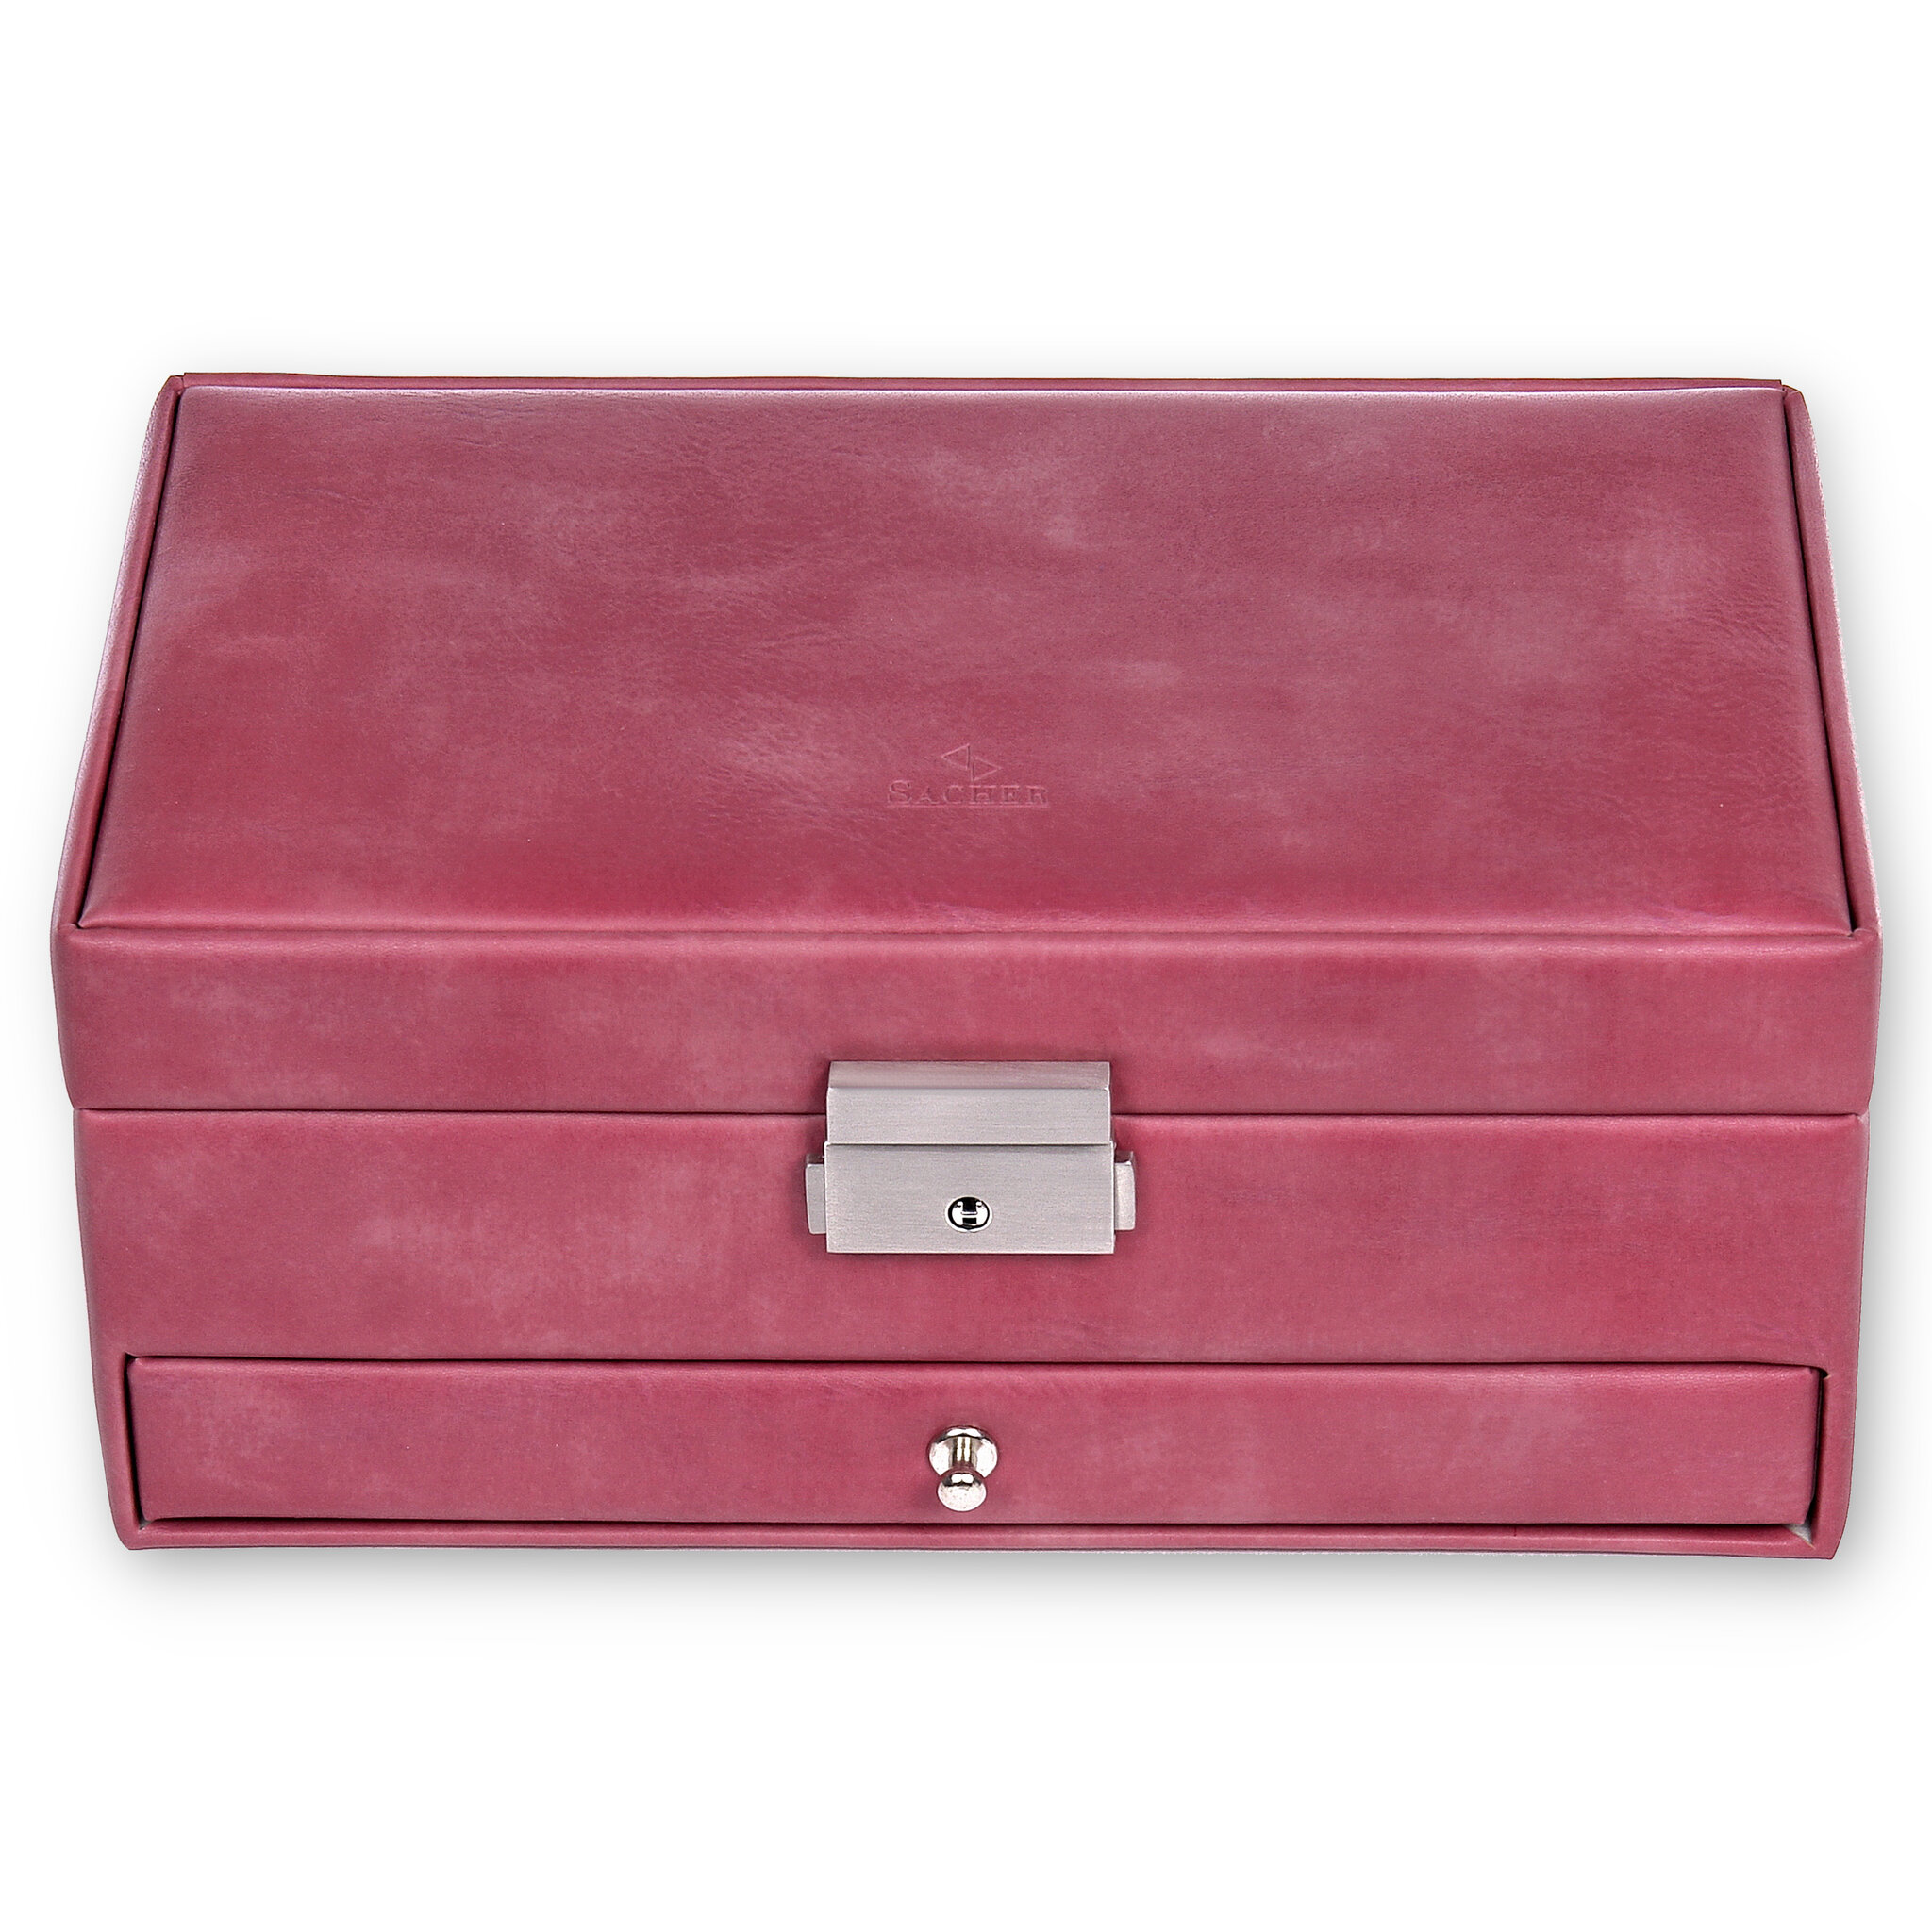 Jewellery box Helen pastello / old rosé